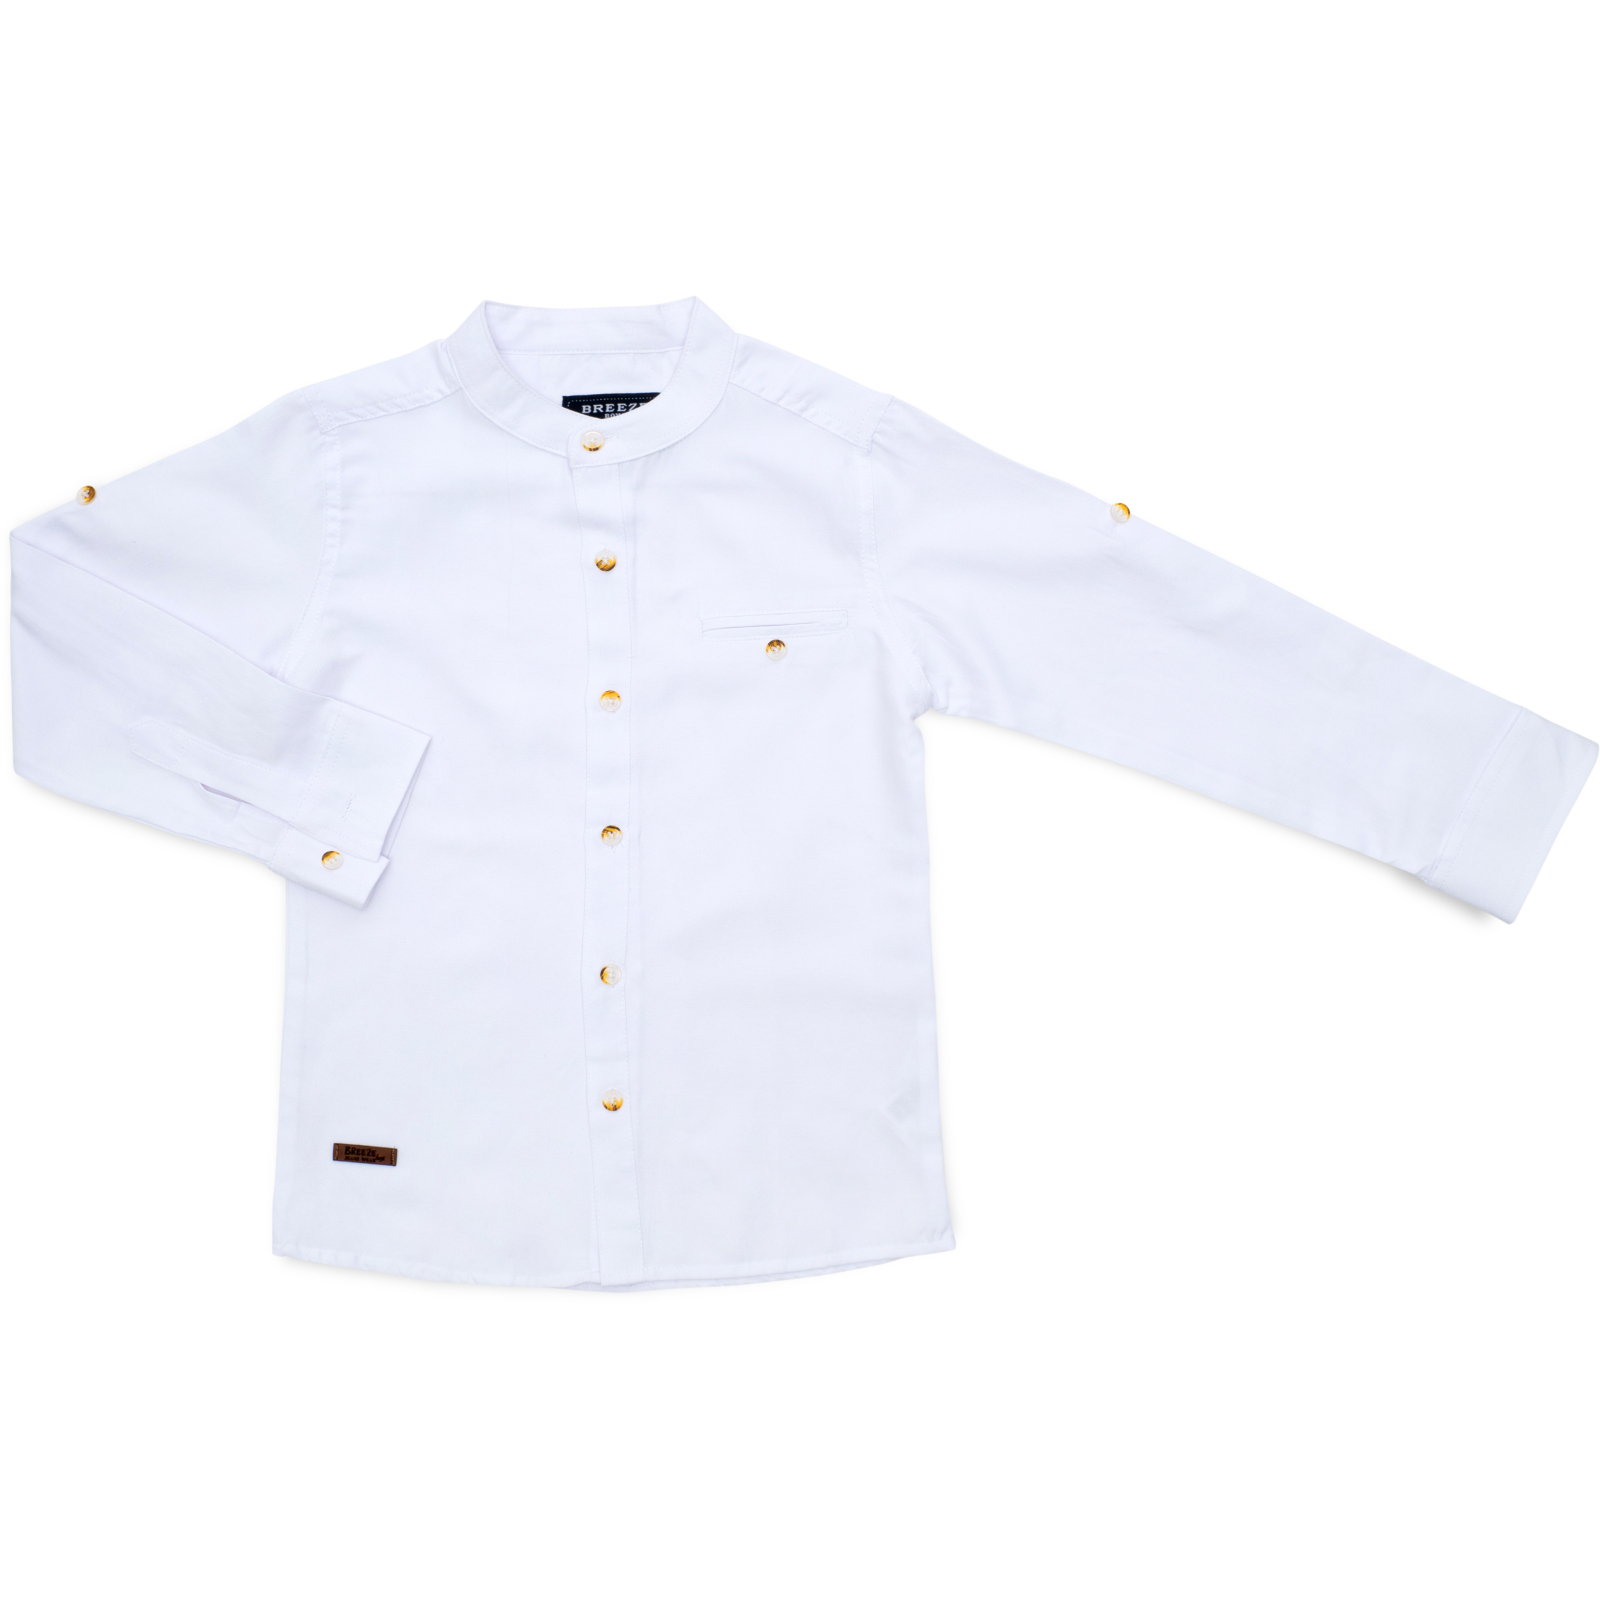 Рубашка Breeze для школы (G-457-146B-white)